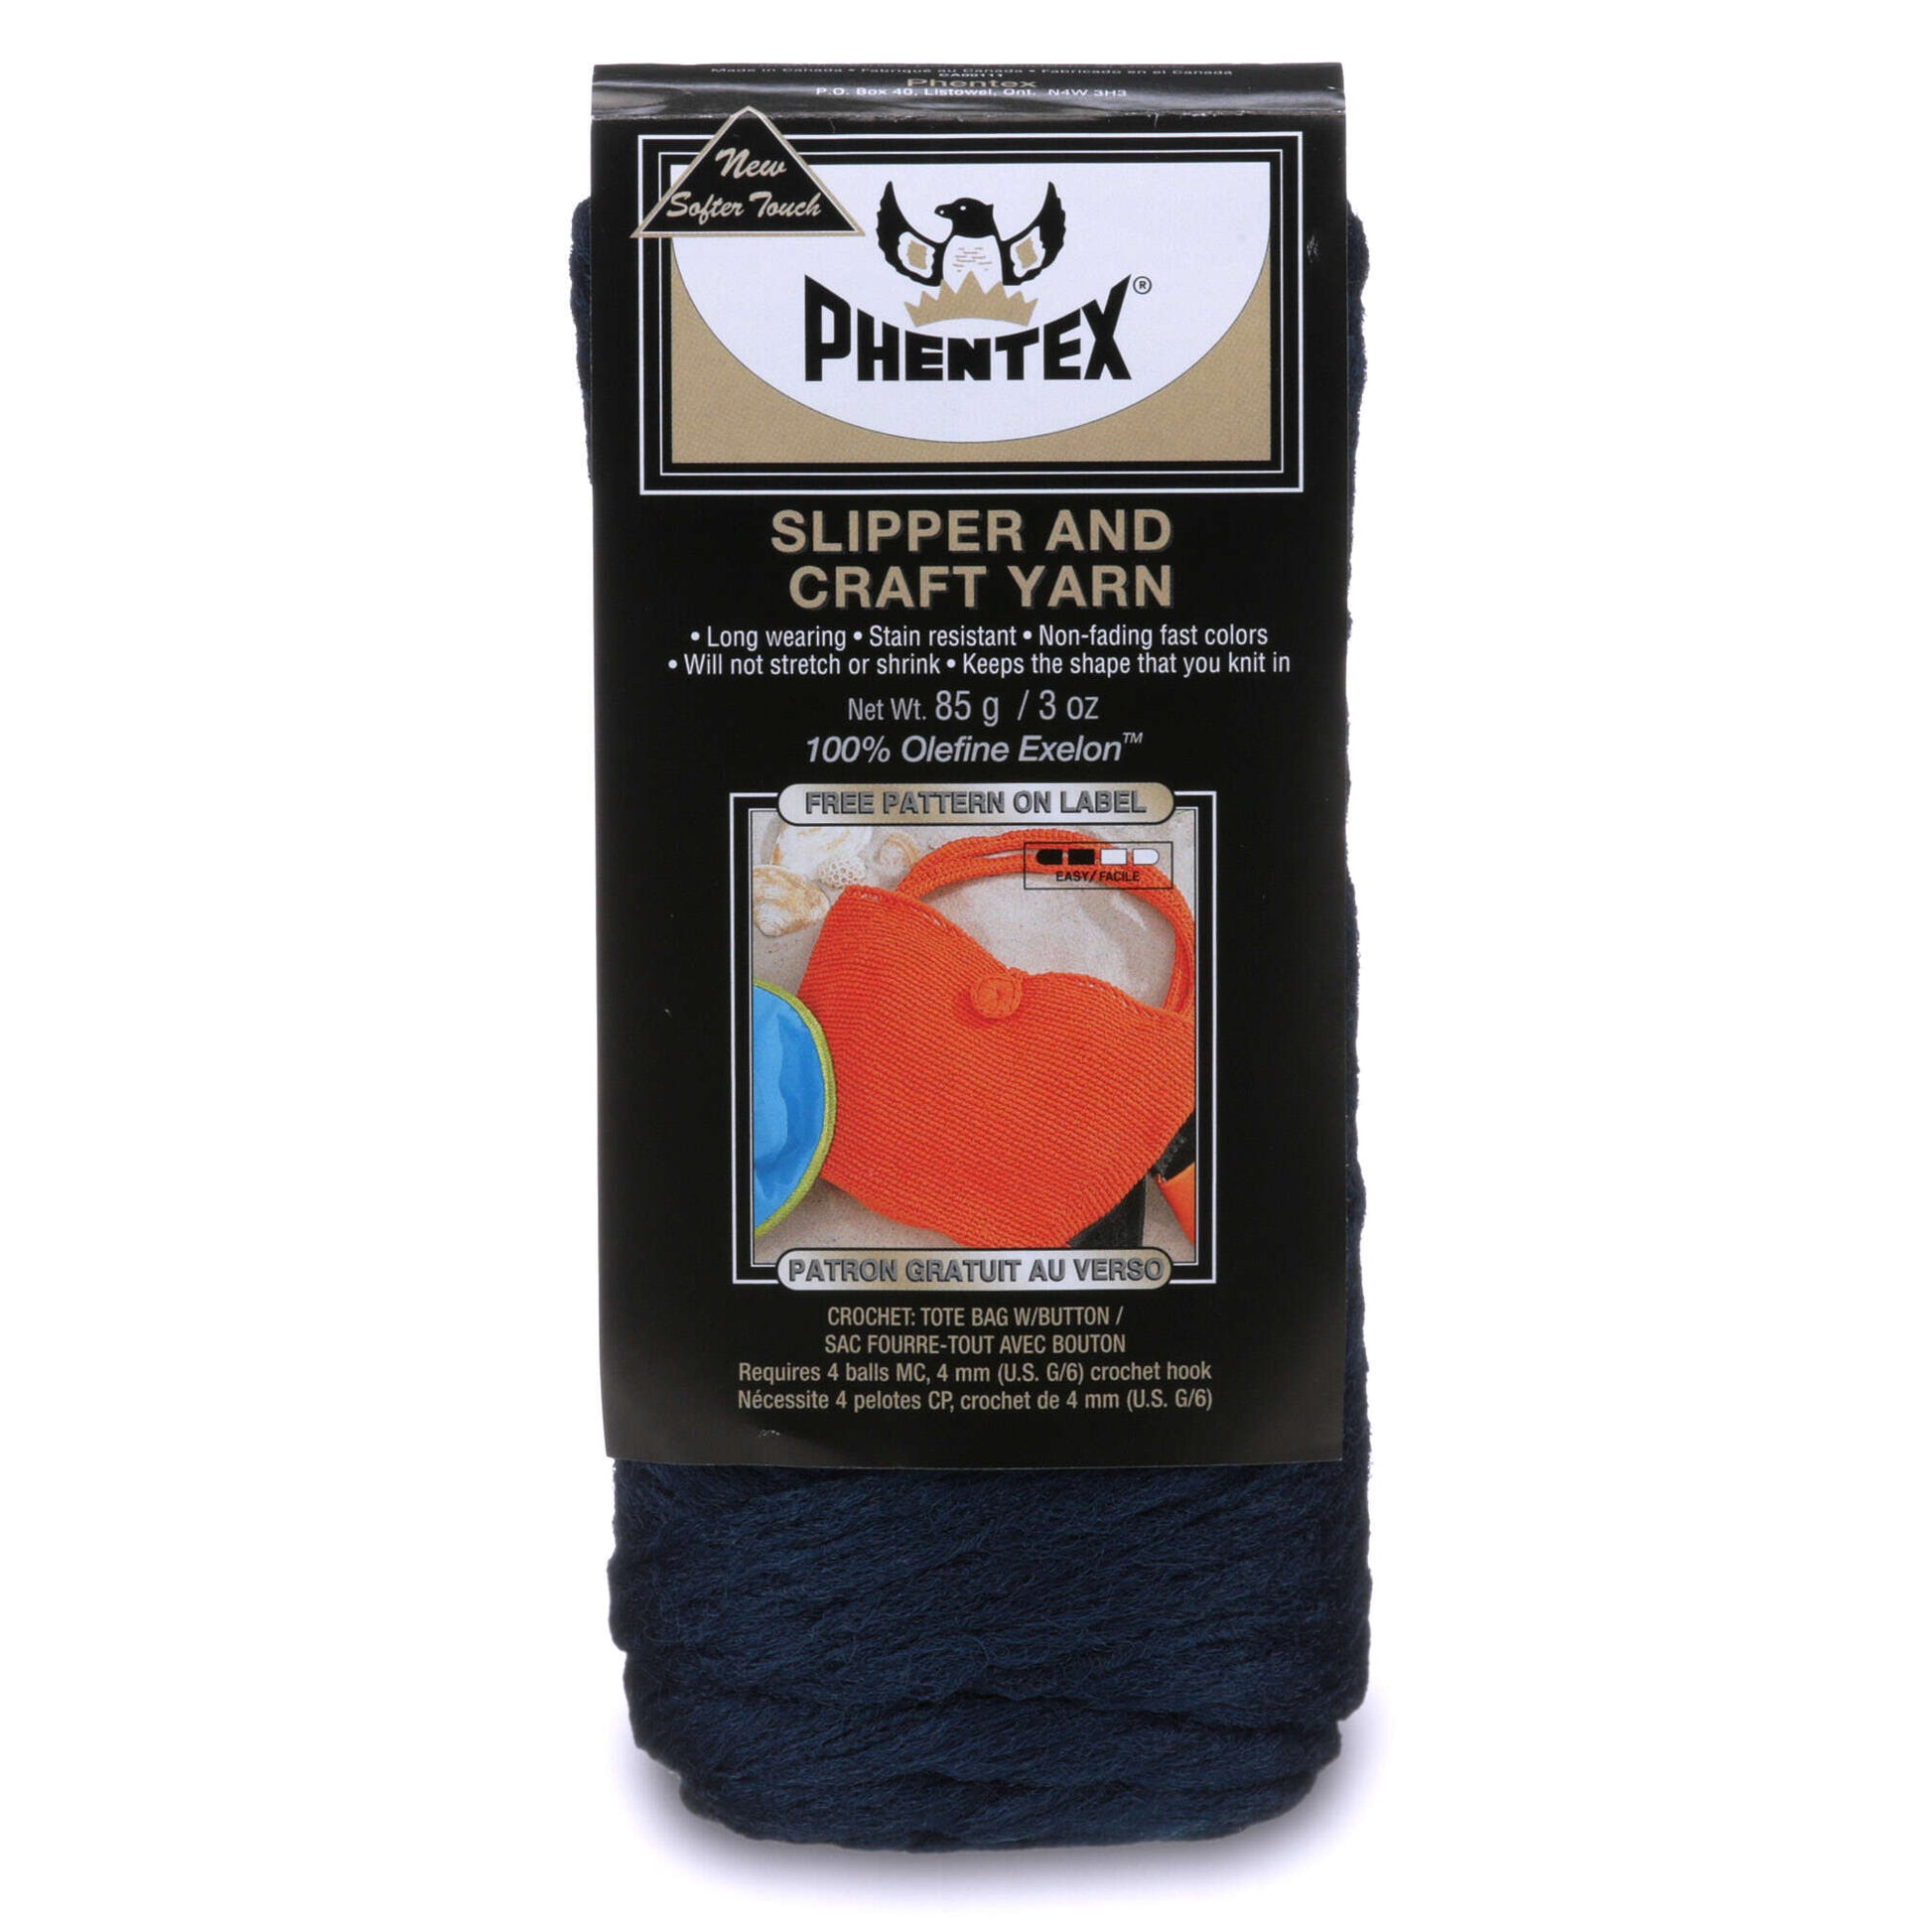 Phentex Slipper & Craft Yarn